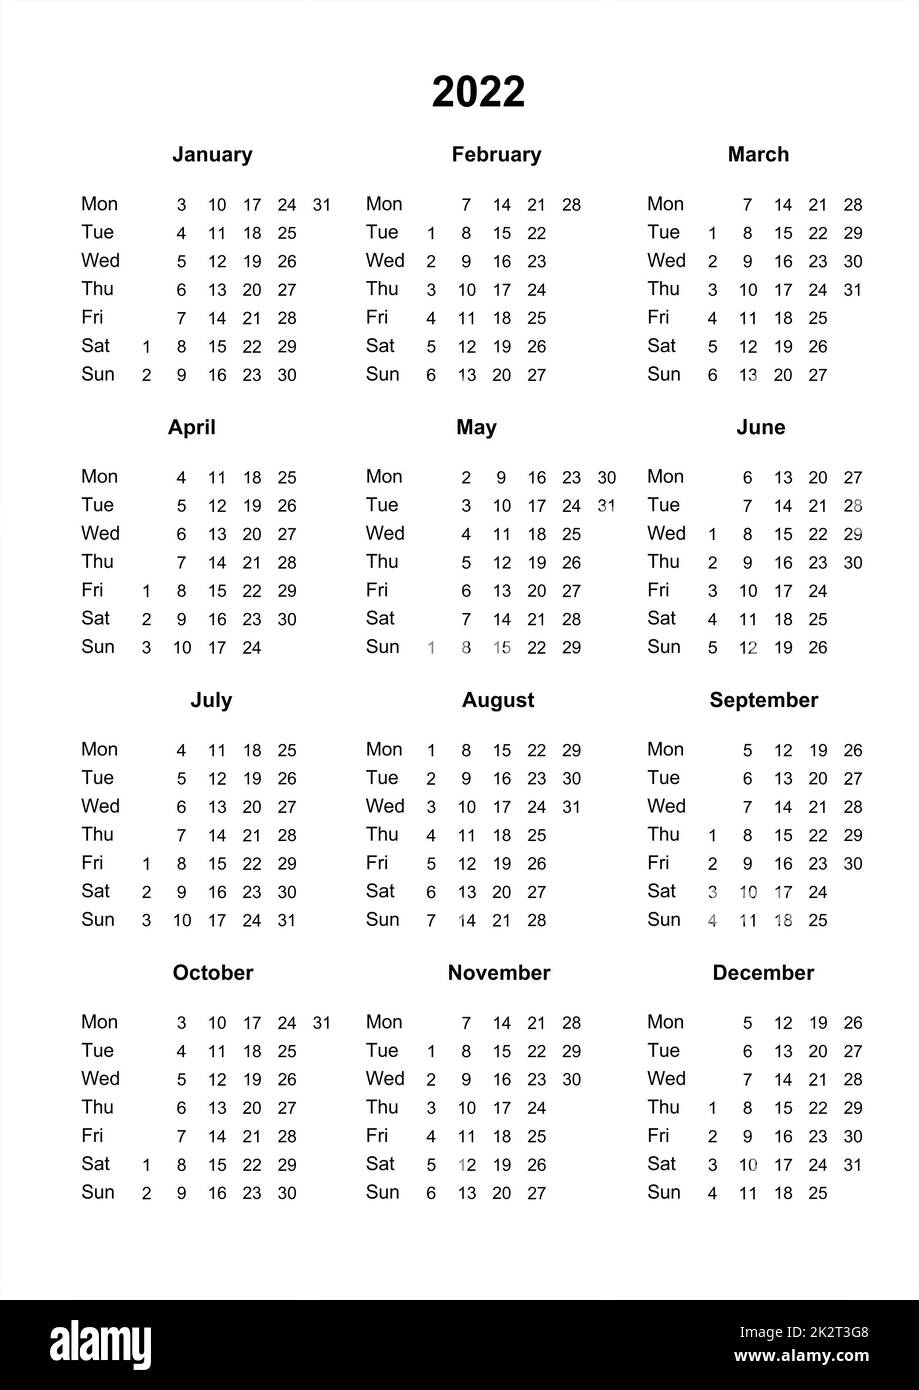 Calendario mensual imprimible fotografías e imágenes de alta resolución -  Alamy